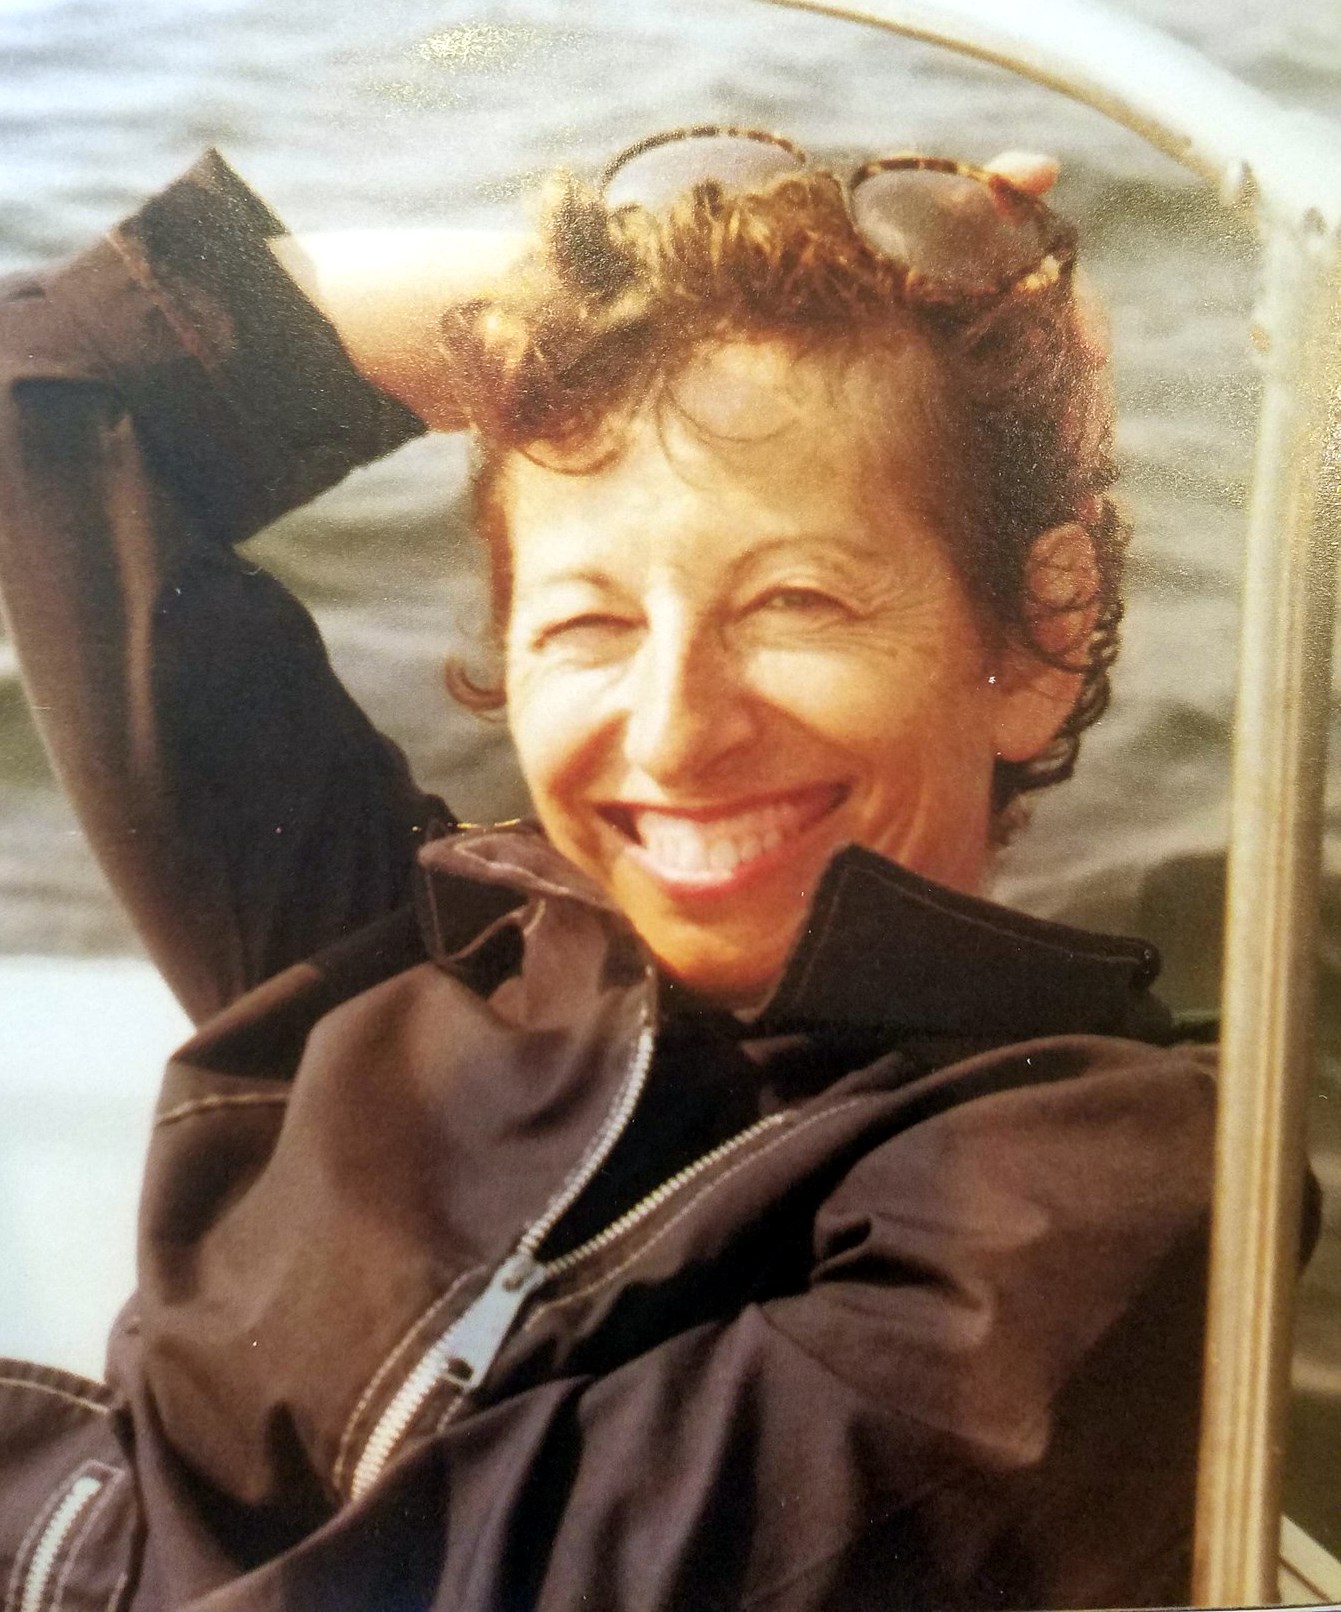 Annette Cook Obituary